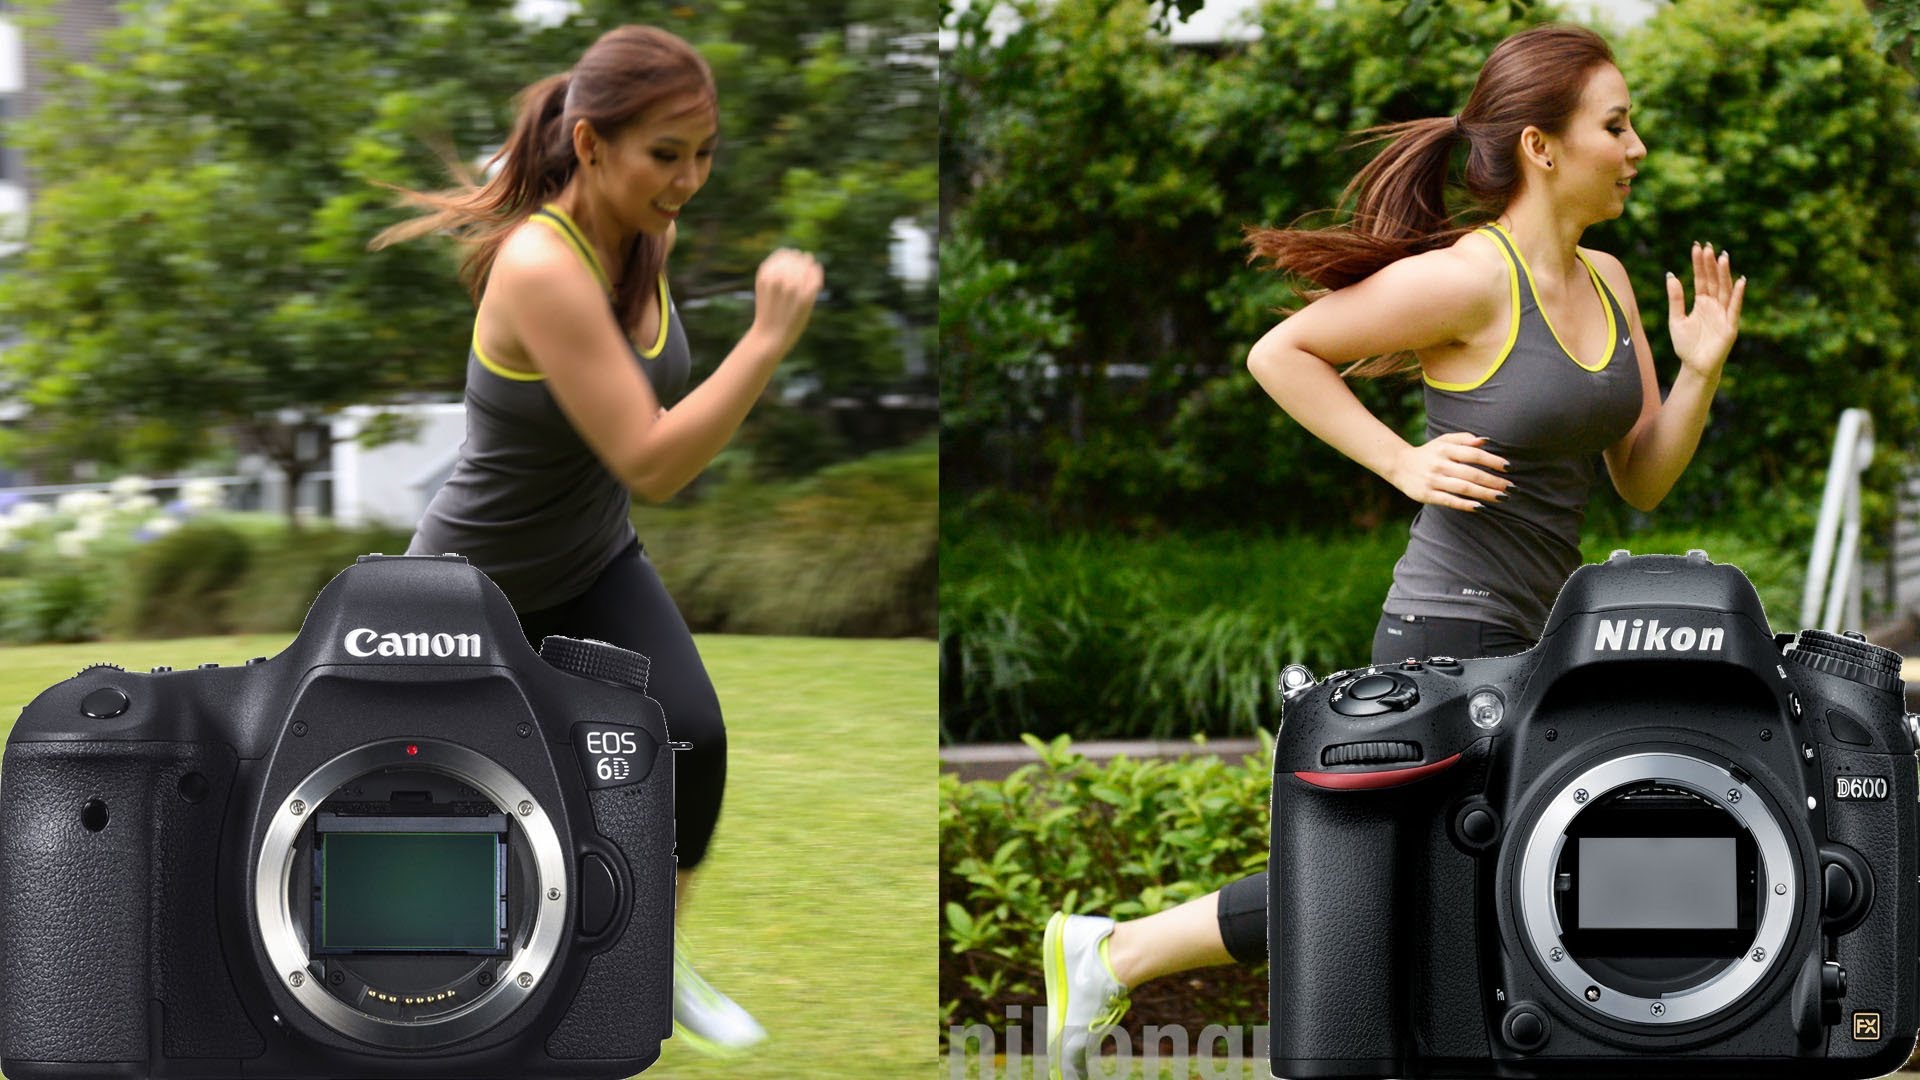 Картинки по параметрам найти. Nikon d600 vs Canon 5d Mark III. Canon Mark 2 vs Nikon d600. Nikon d6 body.